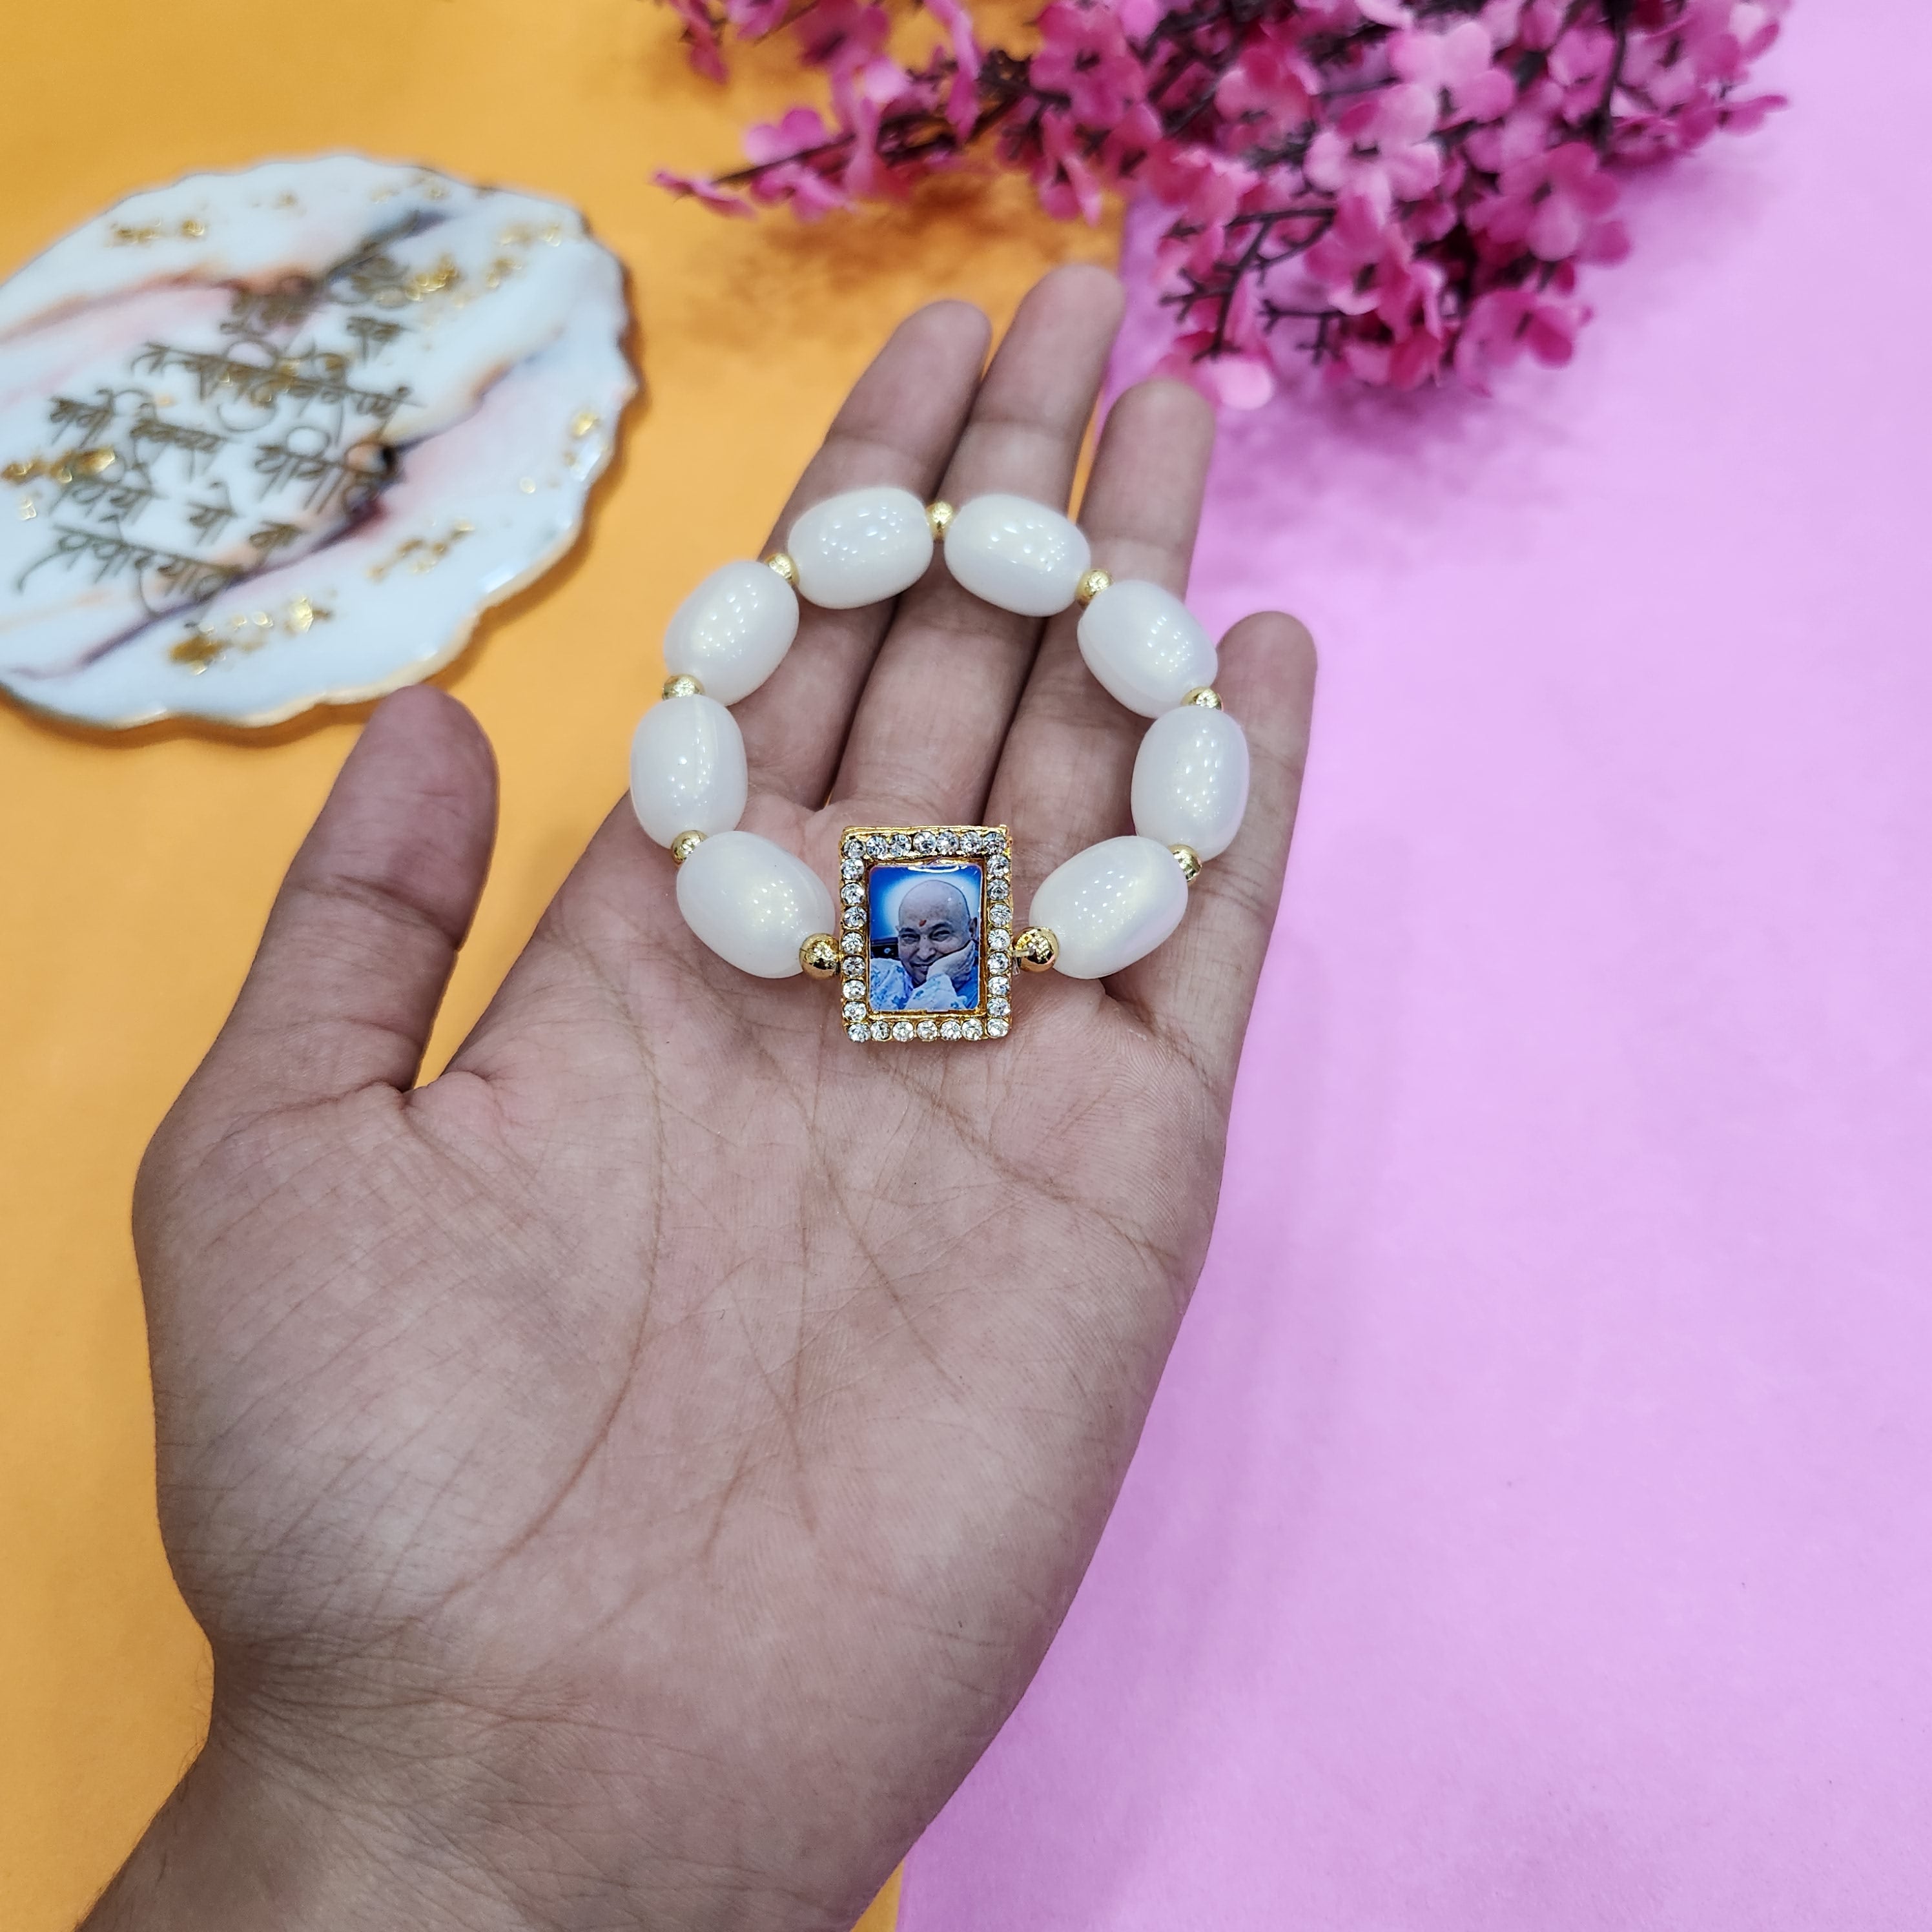 Oval Pearl Bracelet with Jai Guruji Swaroop Handmade Bracelets for Men and Women.